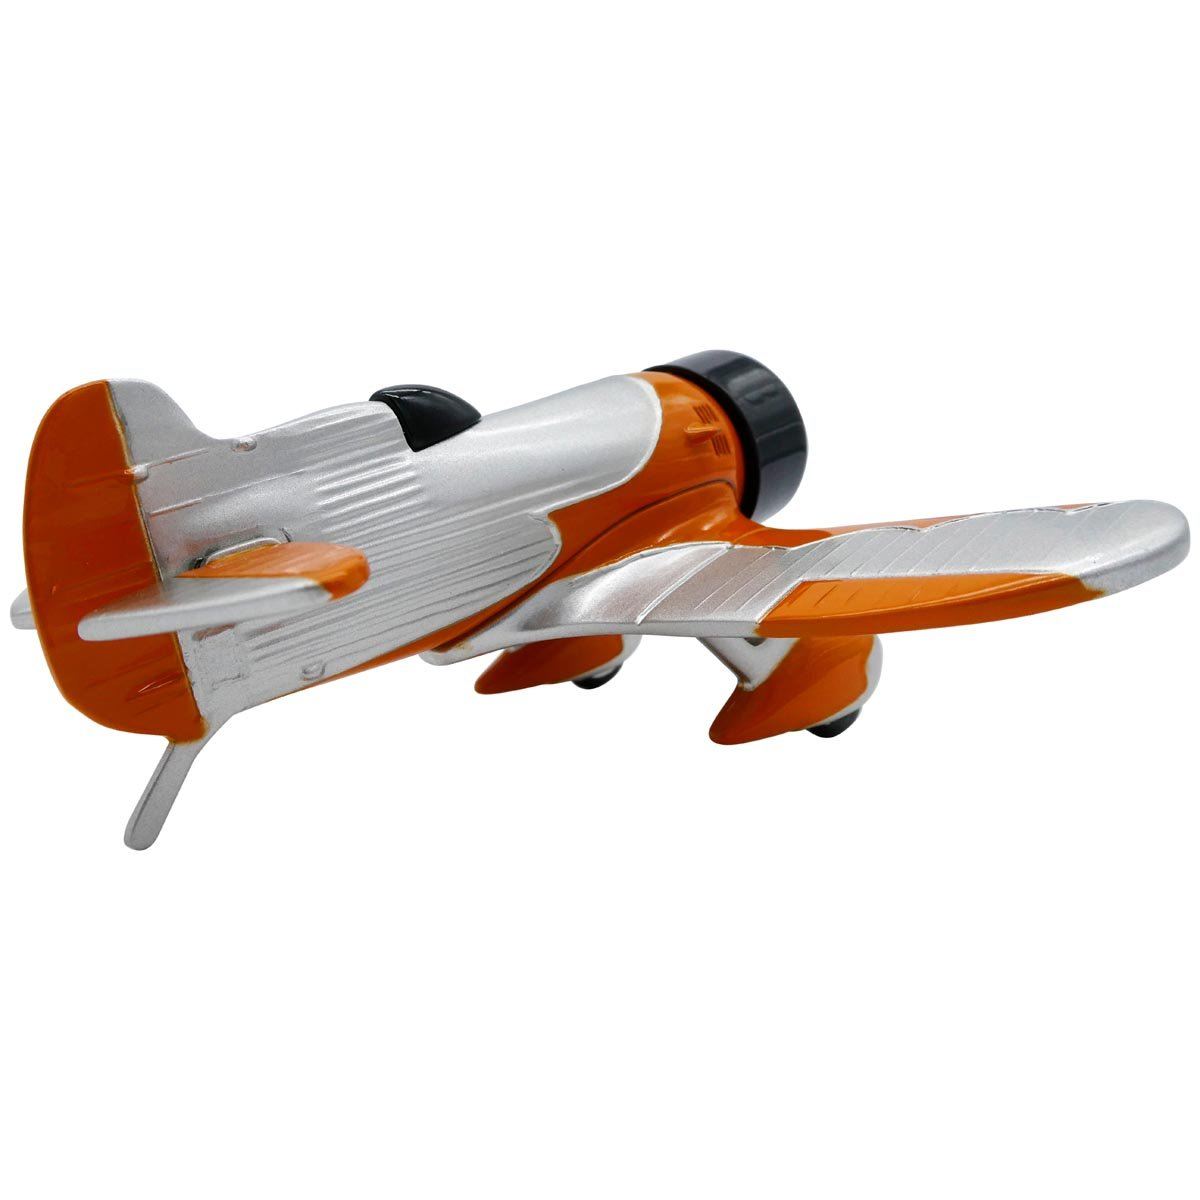 Pilot Toys Orange and Silver Gee Bee Desk Clock - PilotMall.com